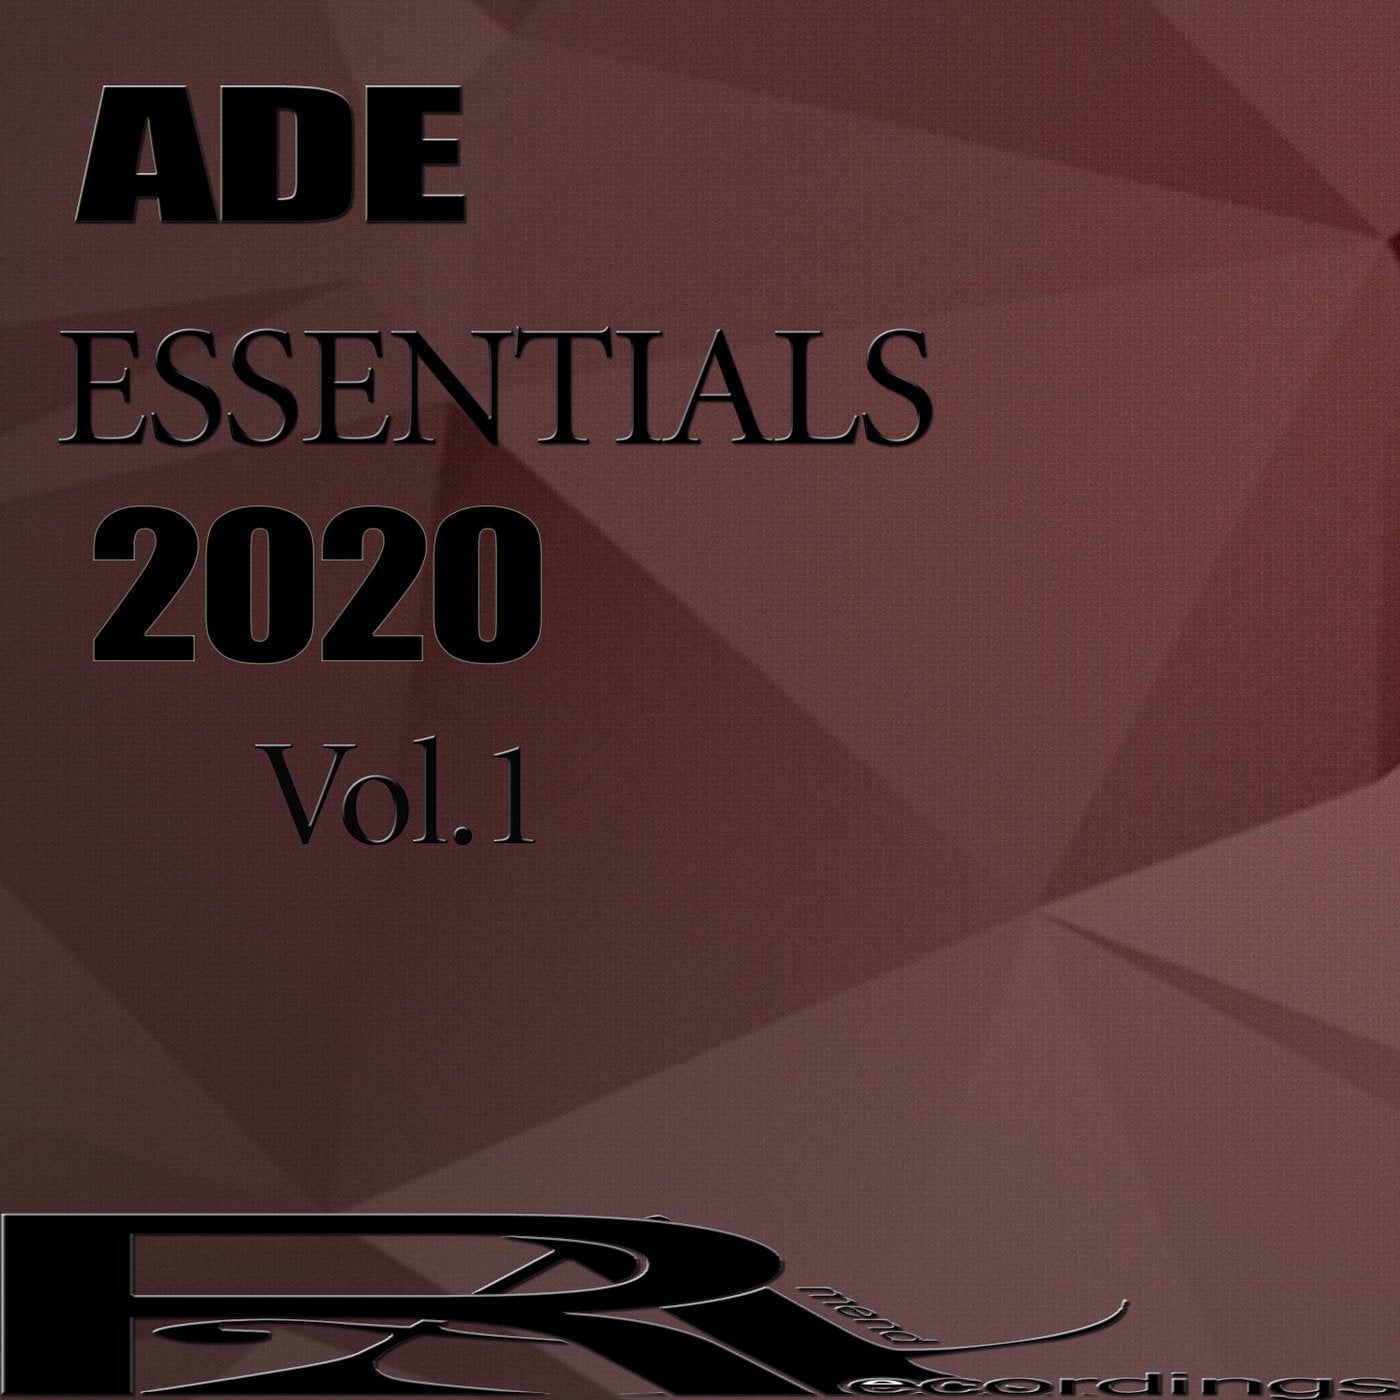 ADE ESSENTIALS 2020, Vol.1